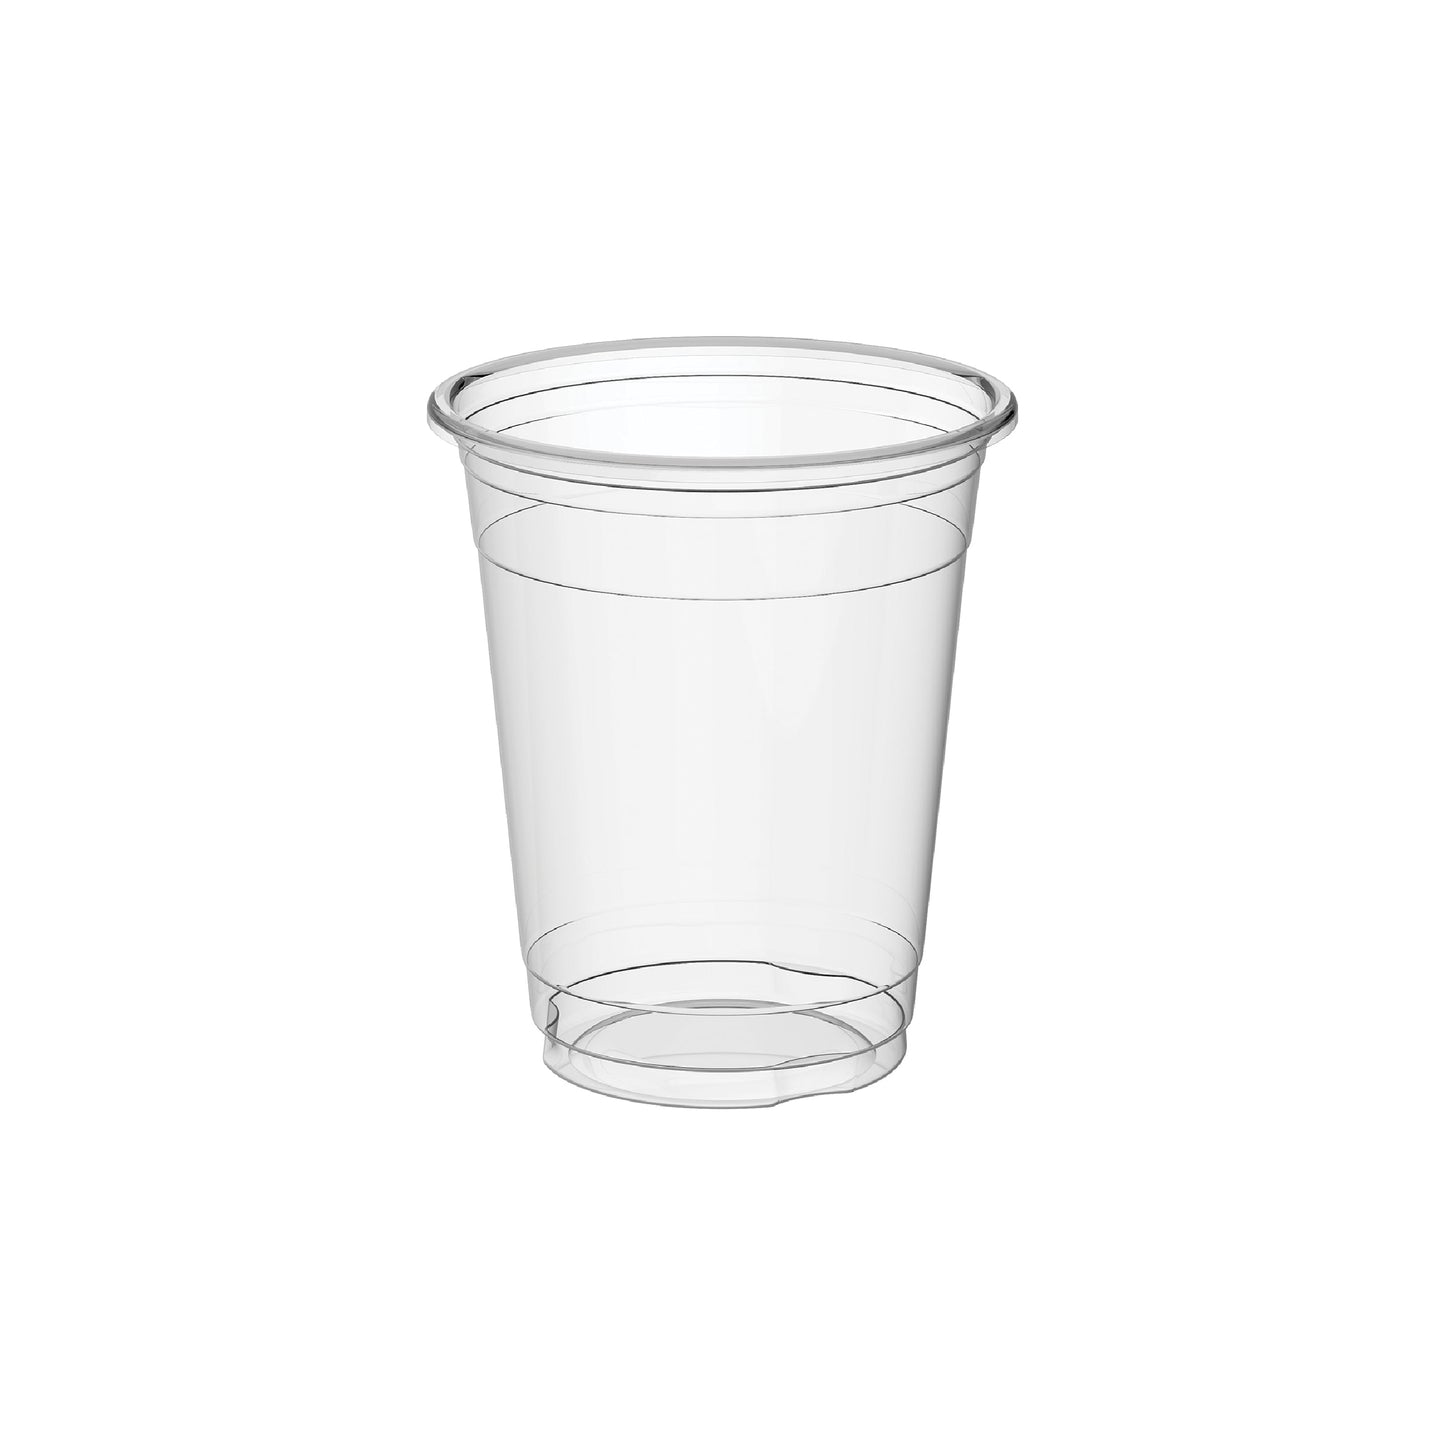 Wholesale Plastic Juice Cups Clear 12oz- Cosmoplast Oman 